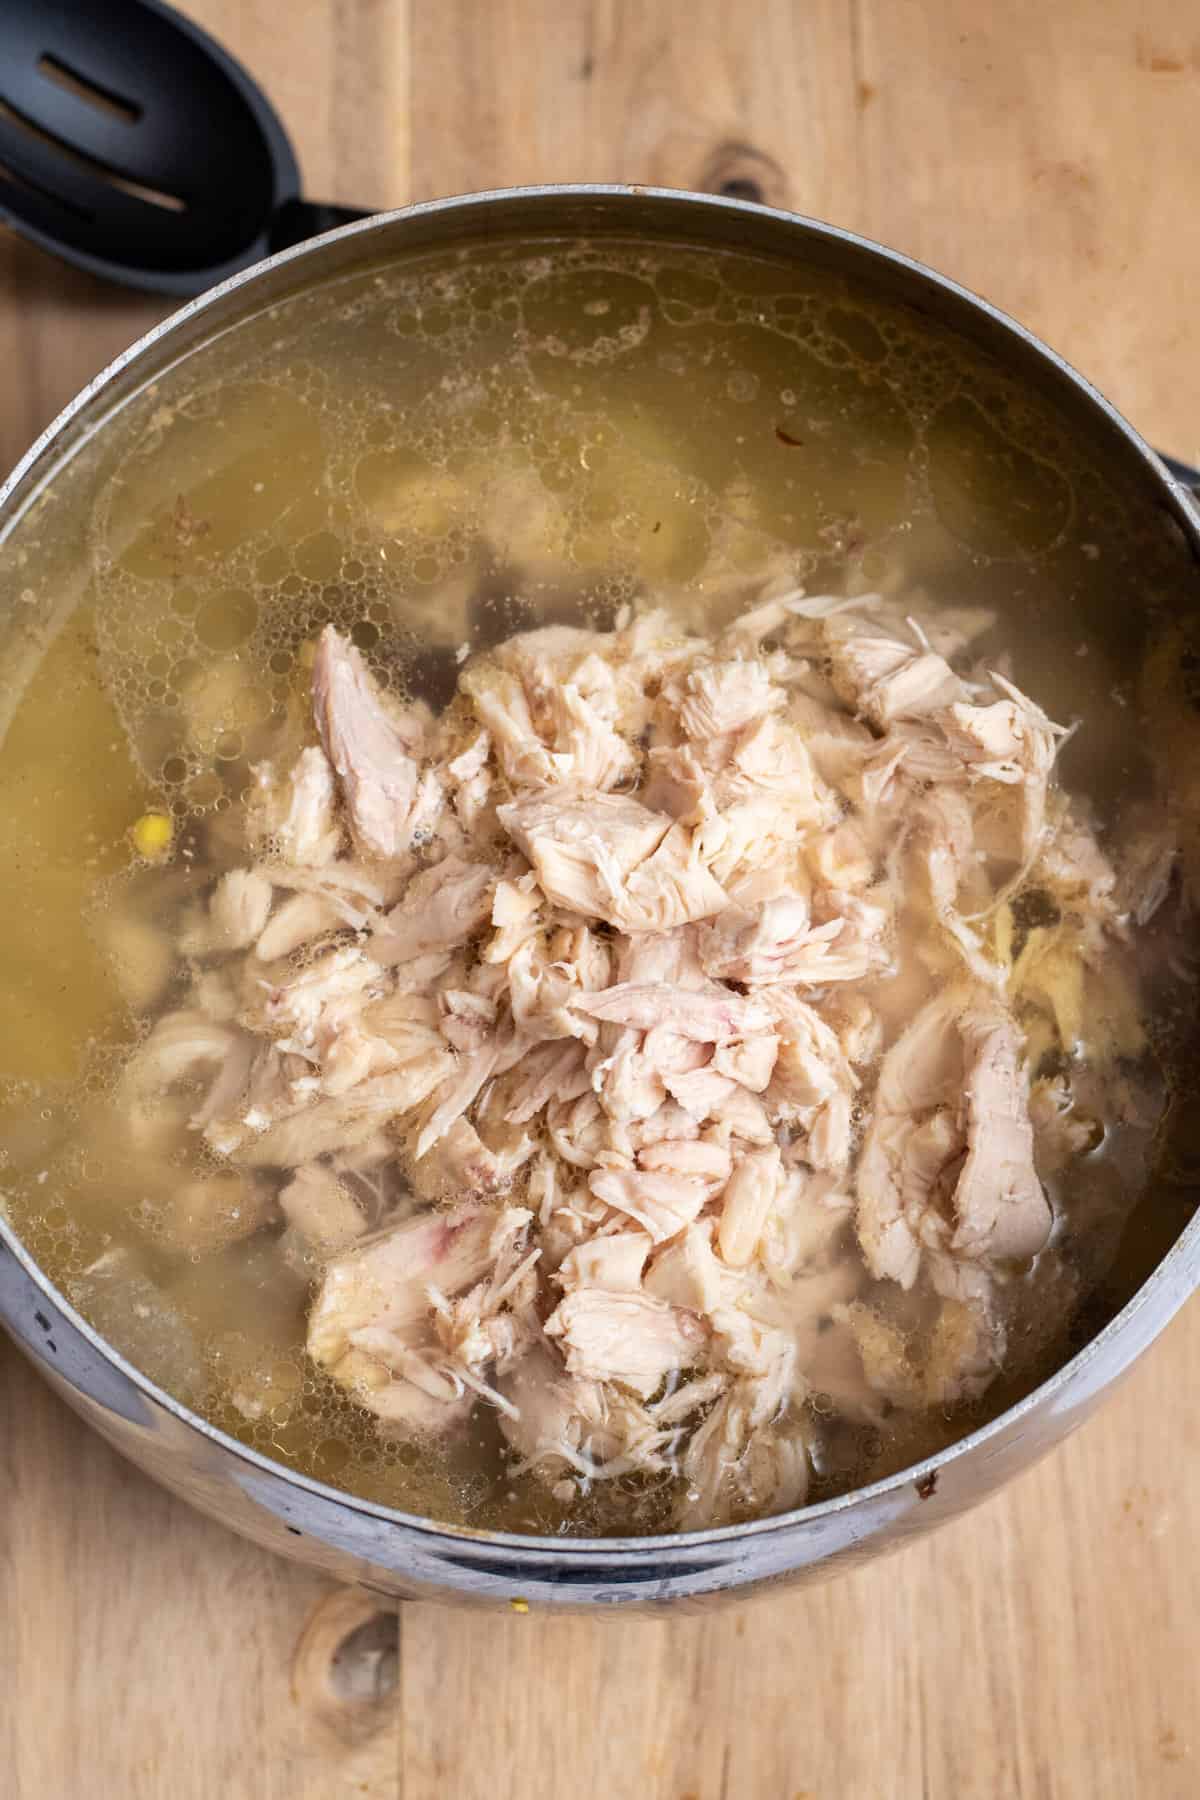 add shredded chicken back into the pot